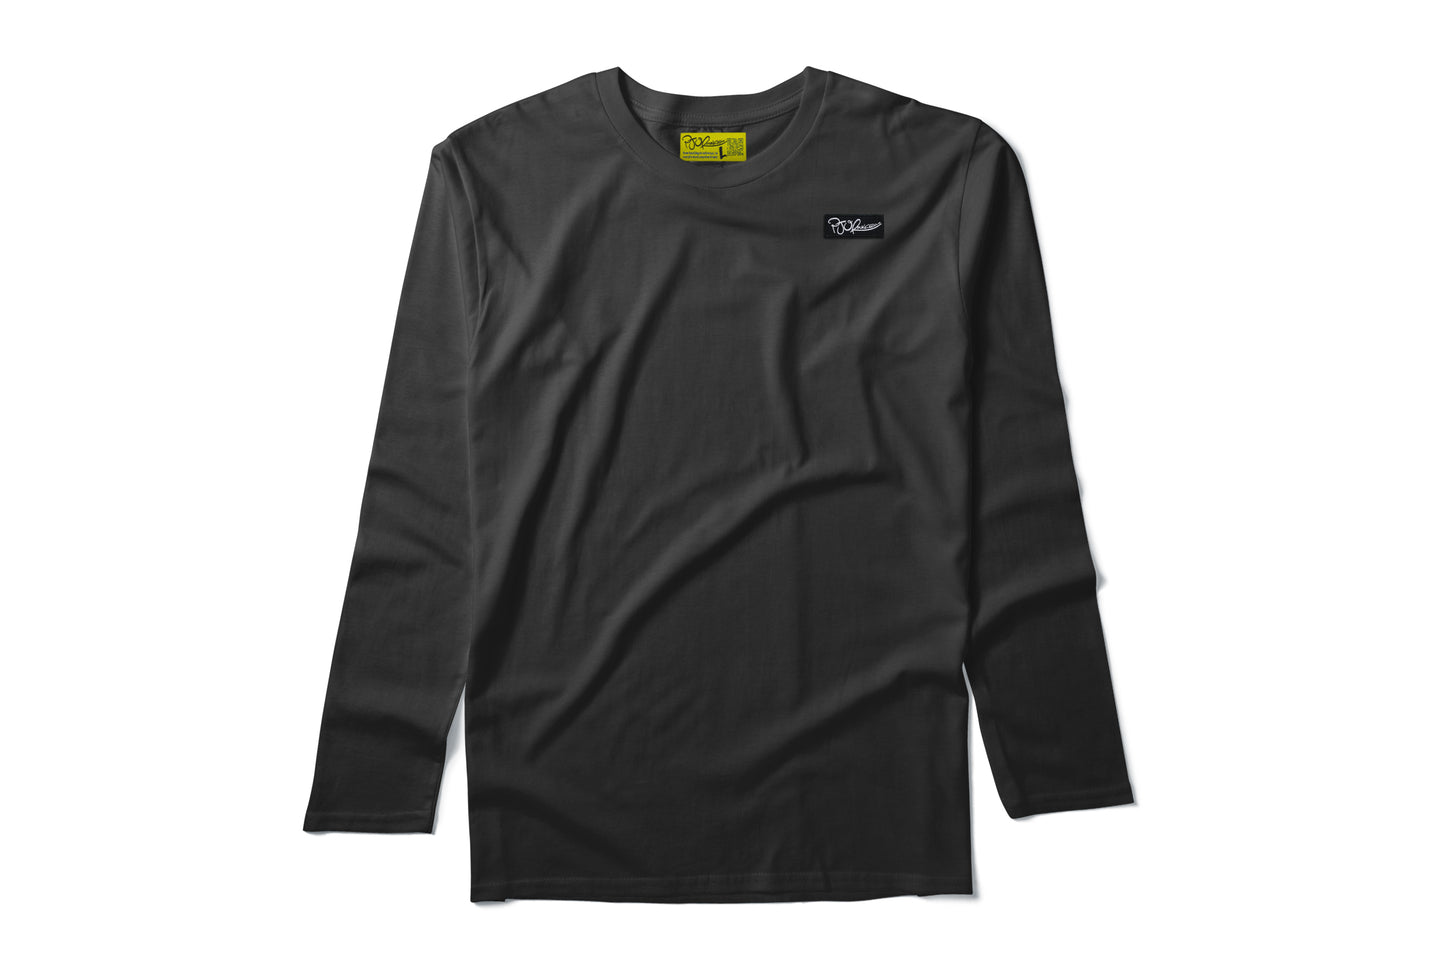 The Illest Heat Transfer on Black Long Sleeve Shirt